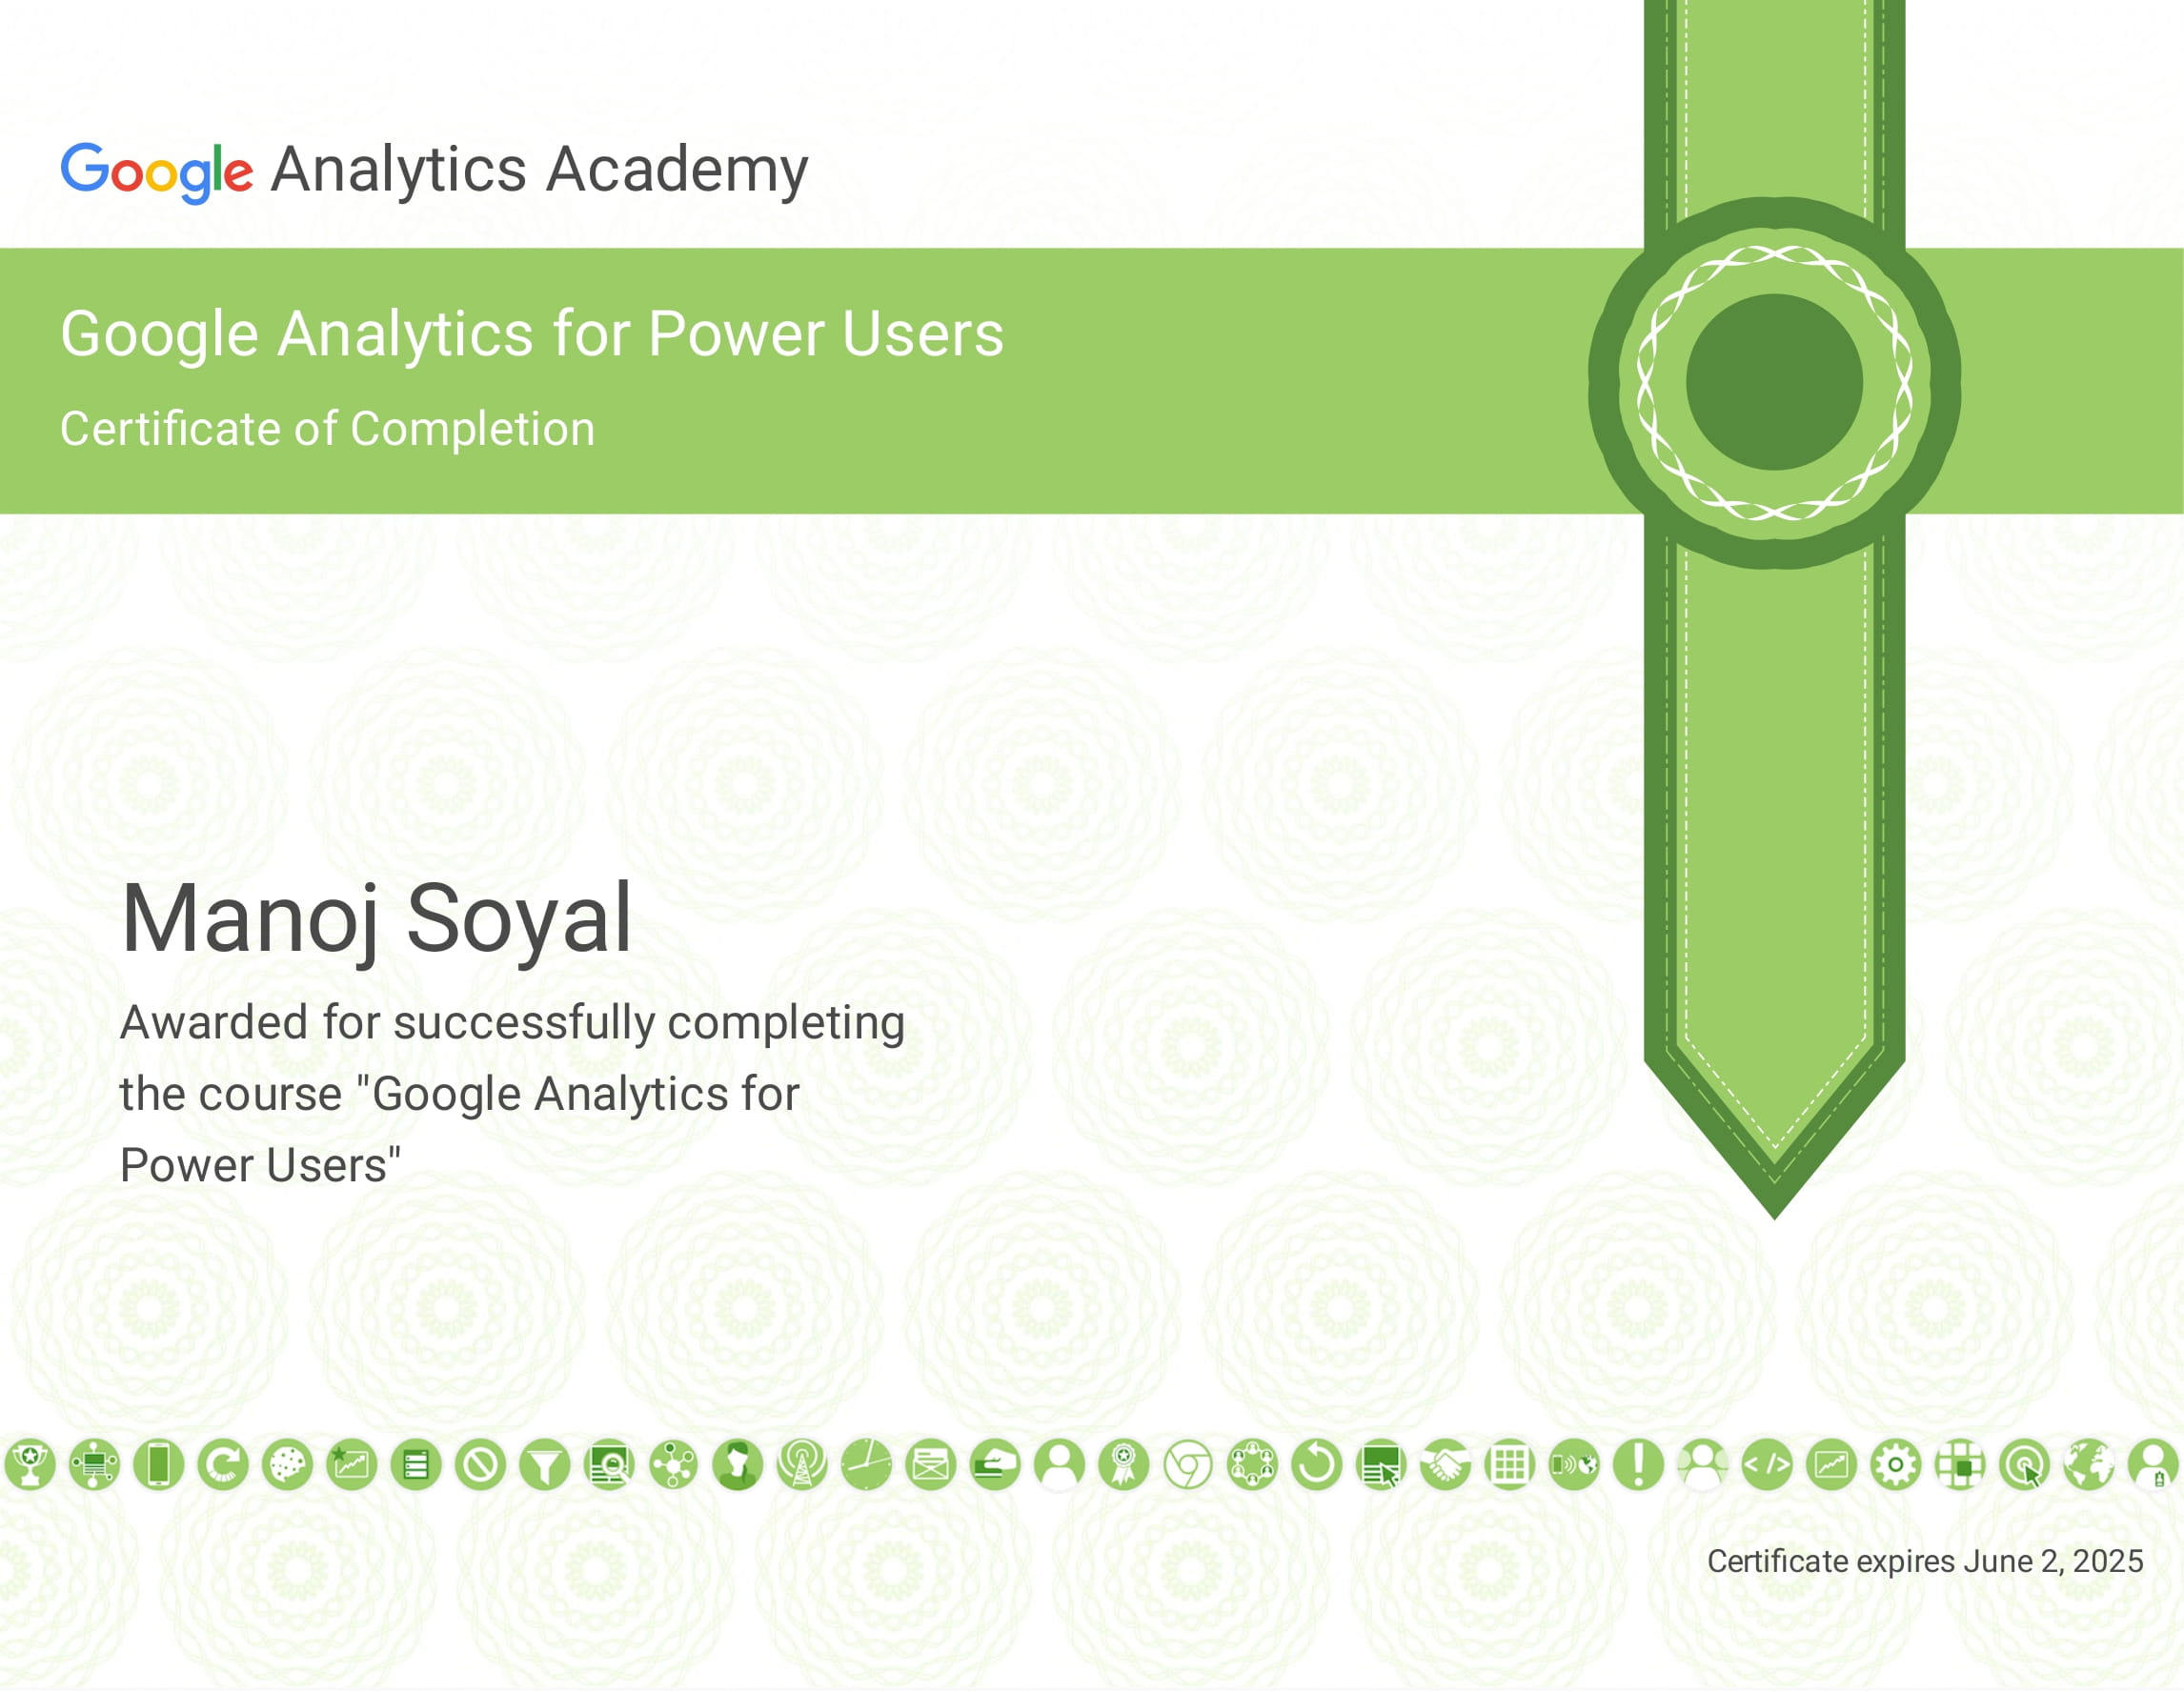 Google Analytics for Power Users